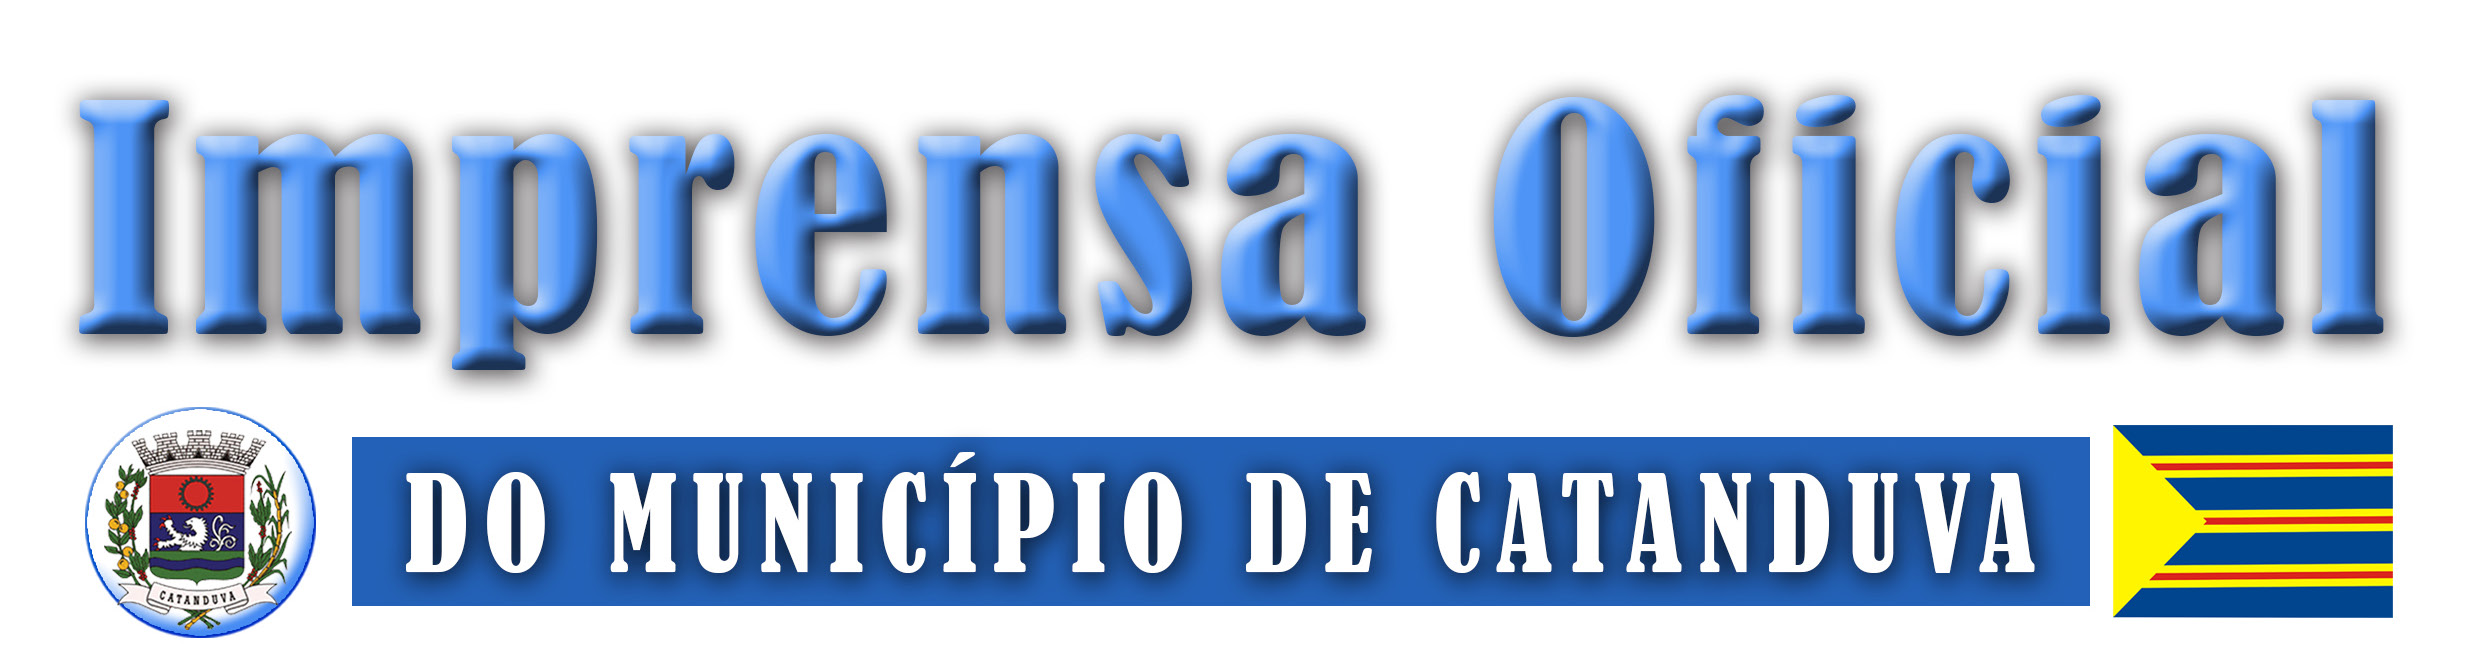 www.catanduva.sp.gov.br www.catanduva.dioe.com.